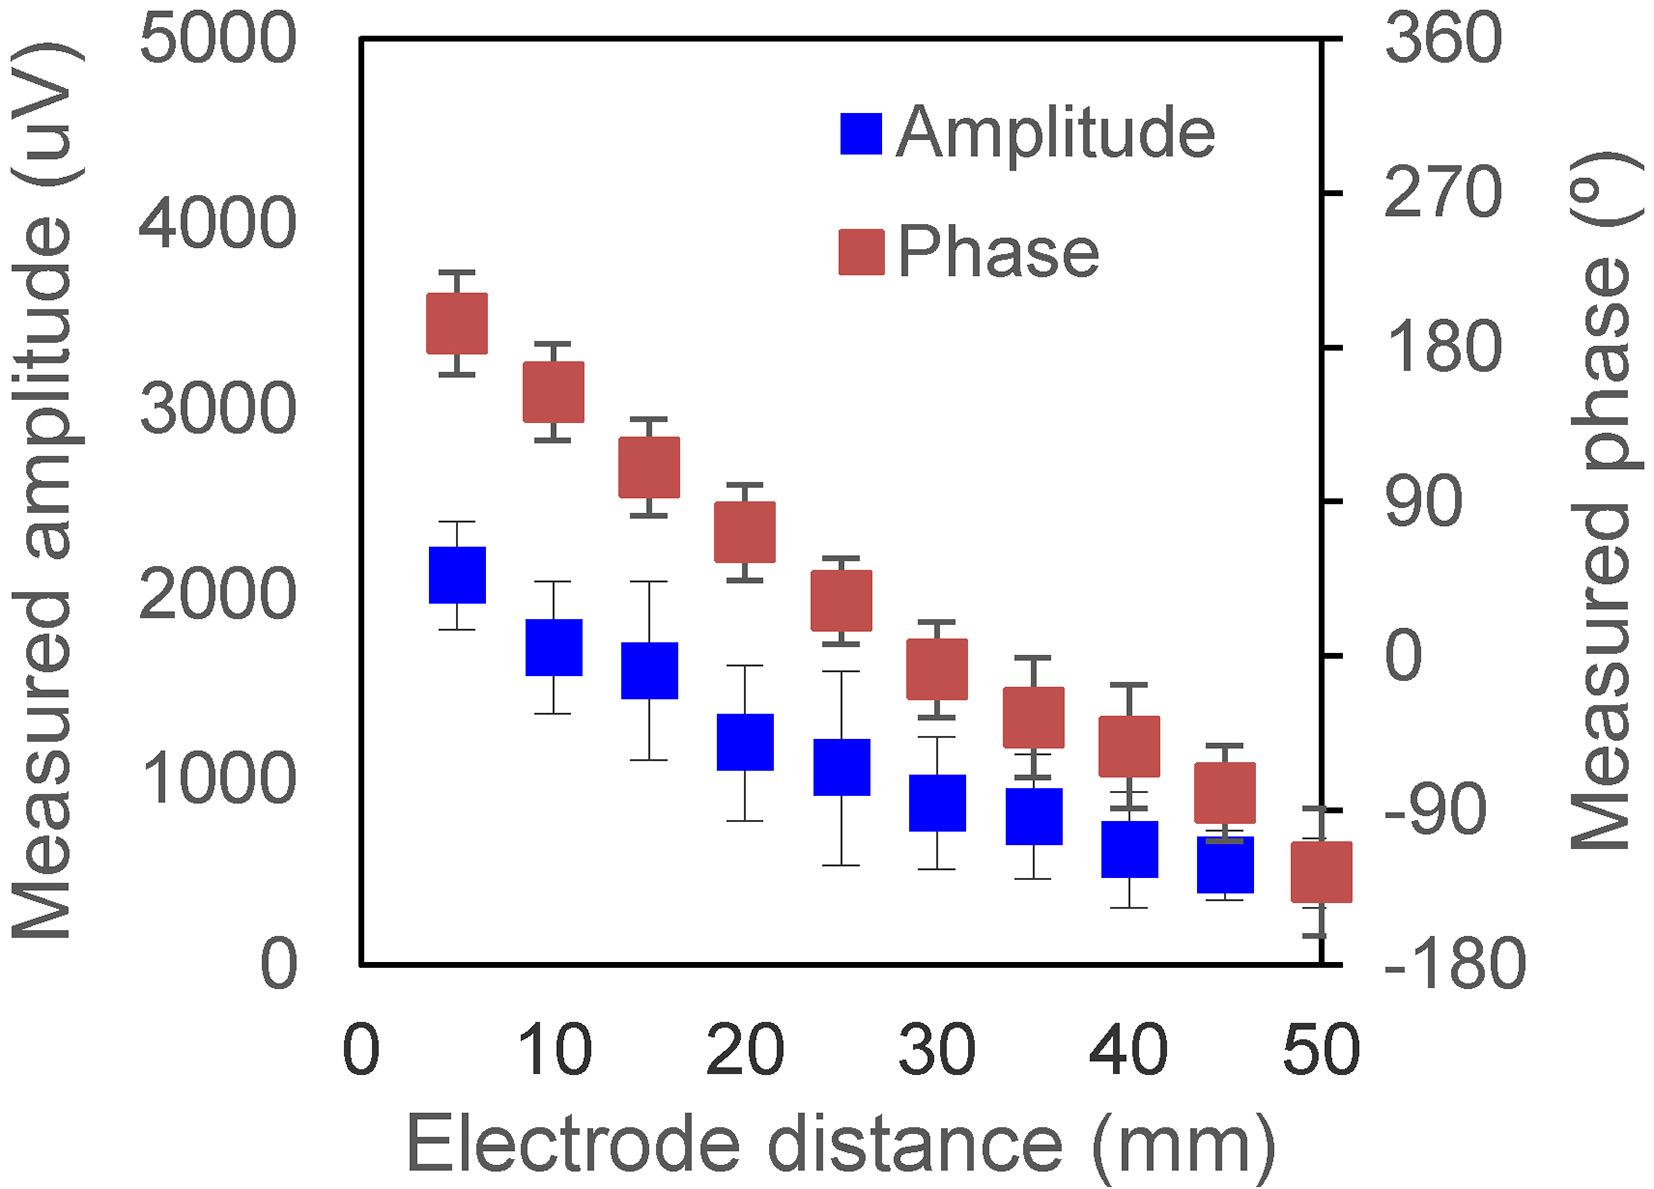 Measured phase under 10 kHz sinuous wave at different electrode distances.